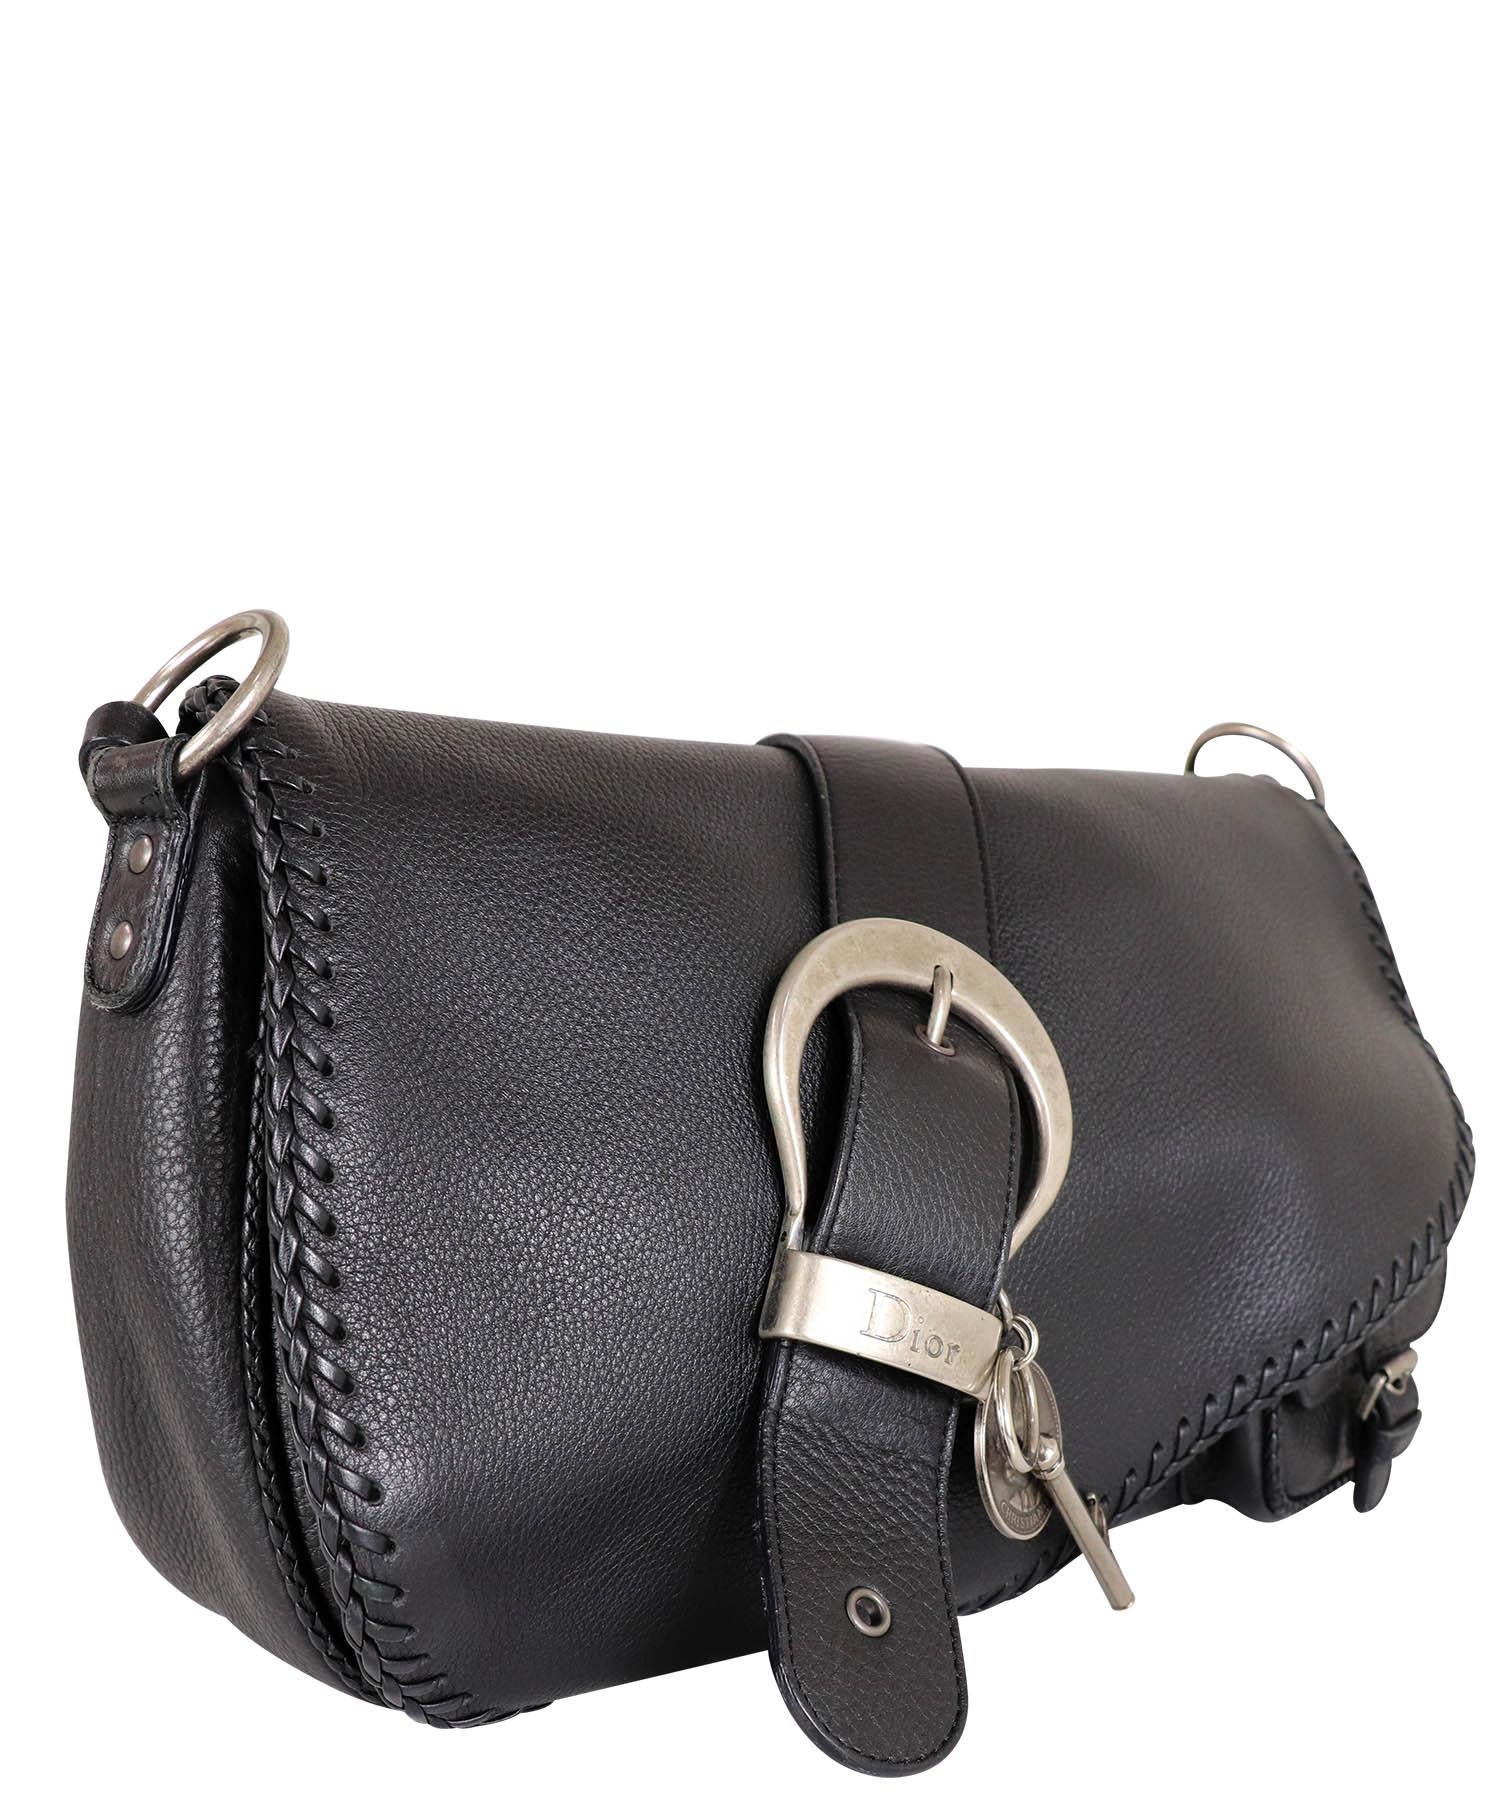 Christian Dior Saddle Chain Oblique purse for Sale in Houston, TX